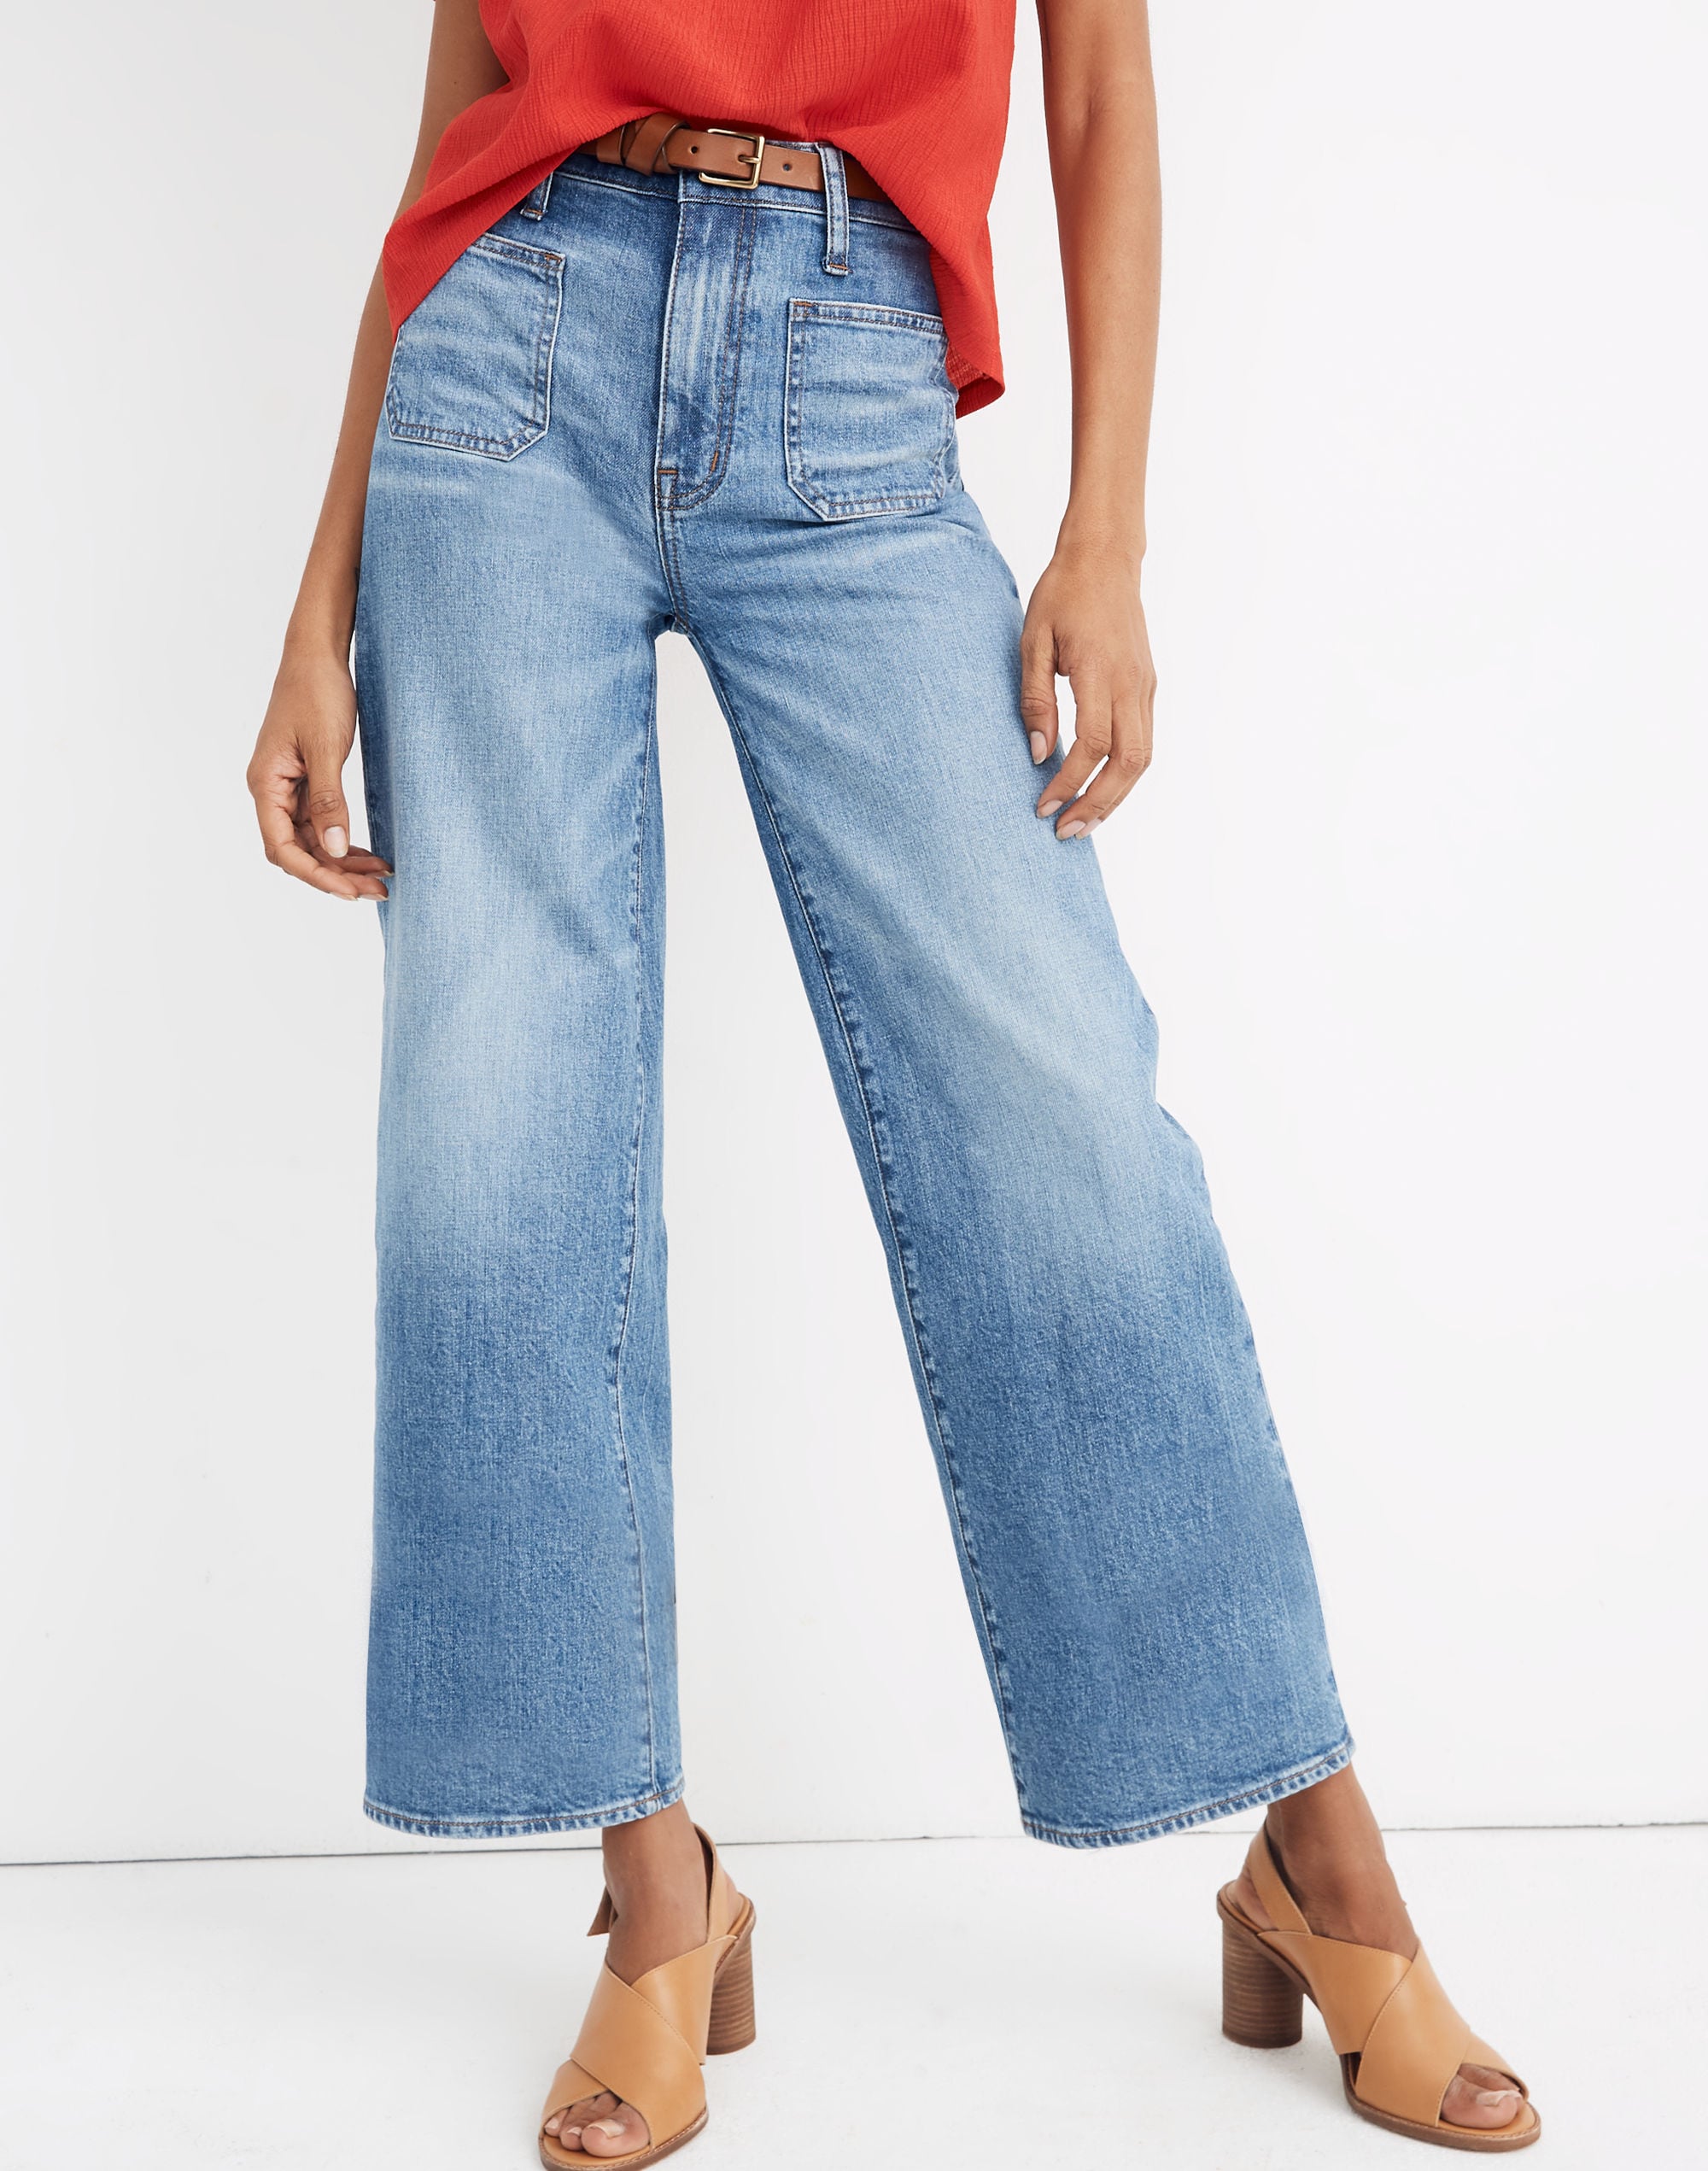 Wide-Leg Crop Jeans in Chesney Wash